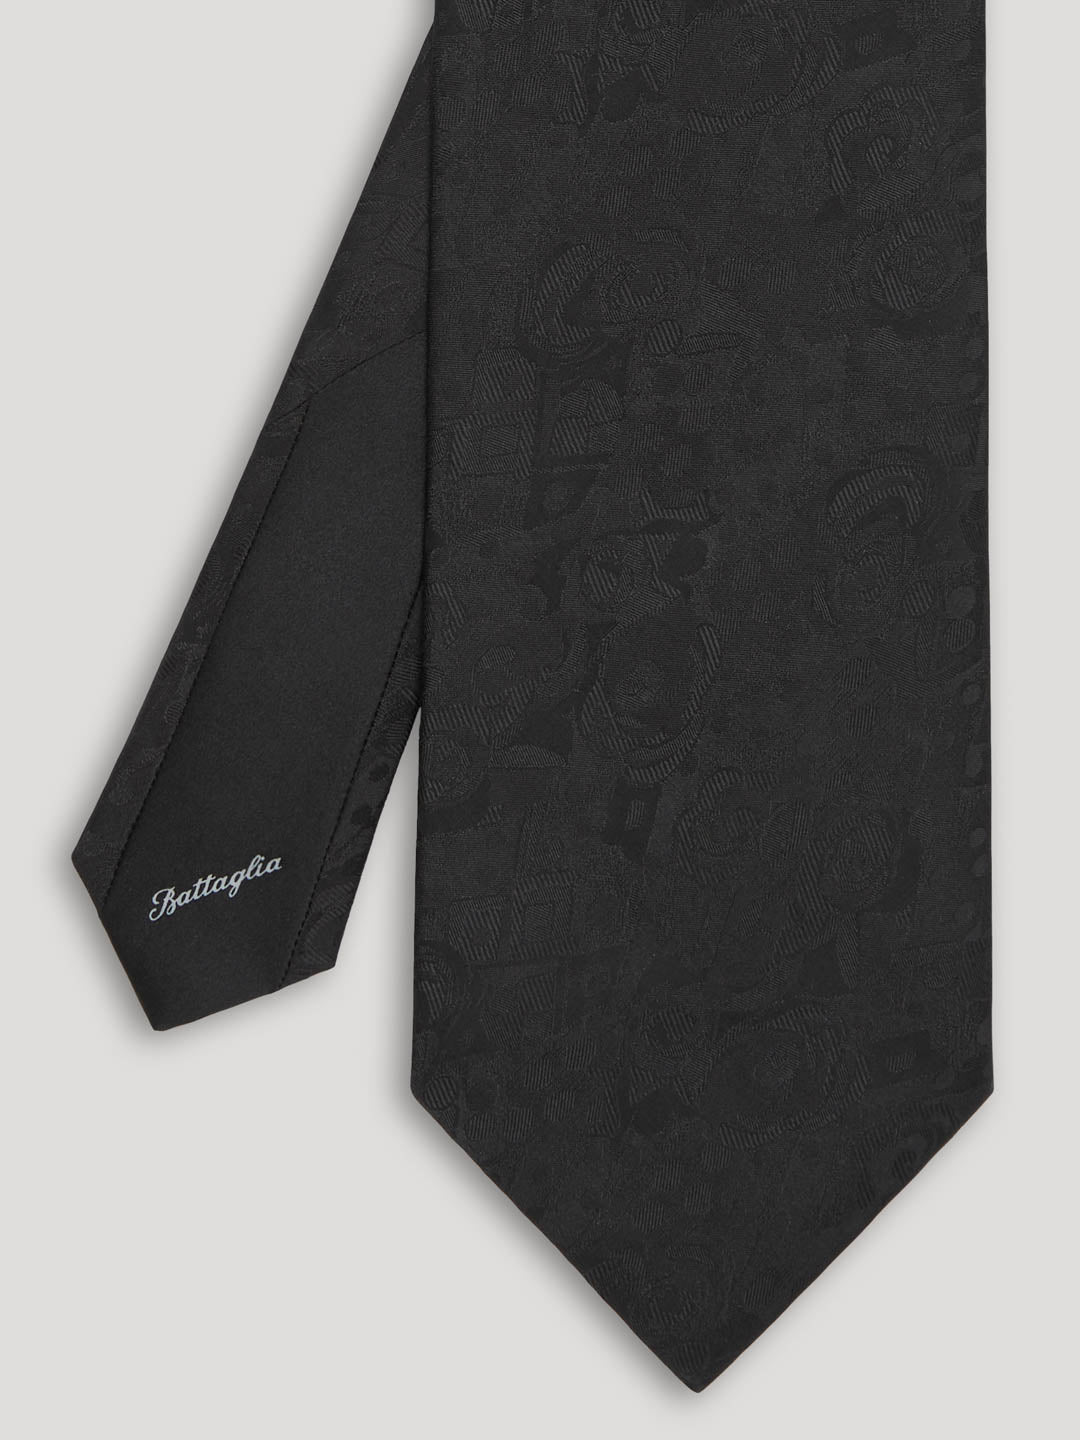 Black silk tie. 